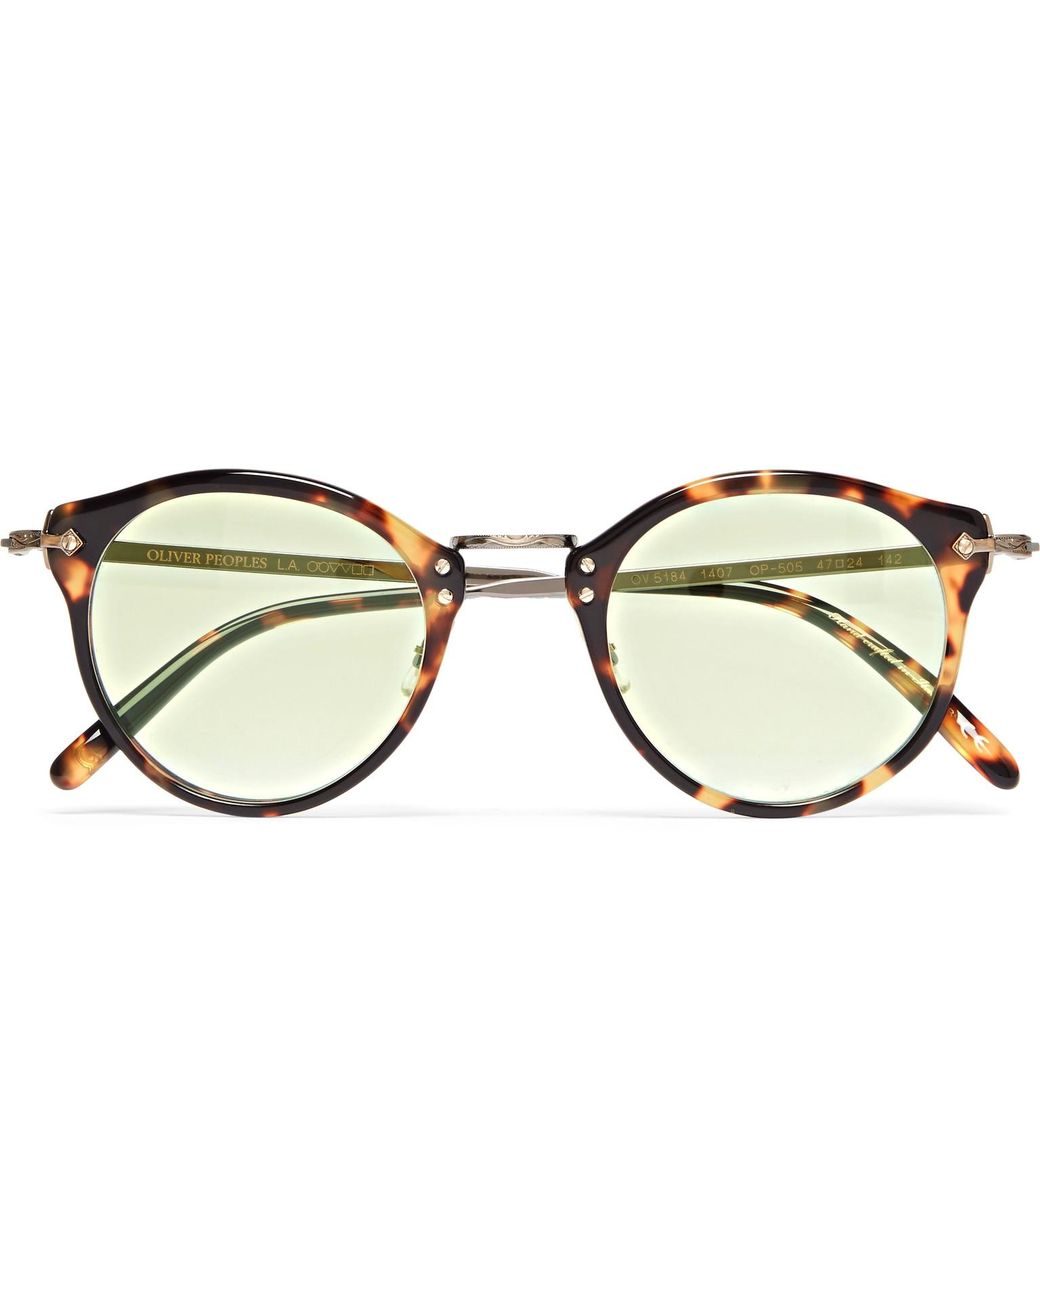 Oliver Peoples Papillon W Antique Gold Frame Brown Lens Sunglasses